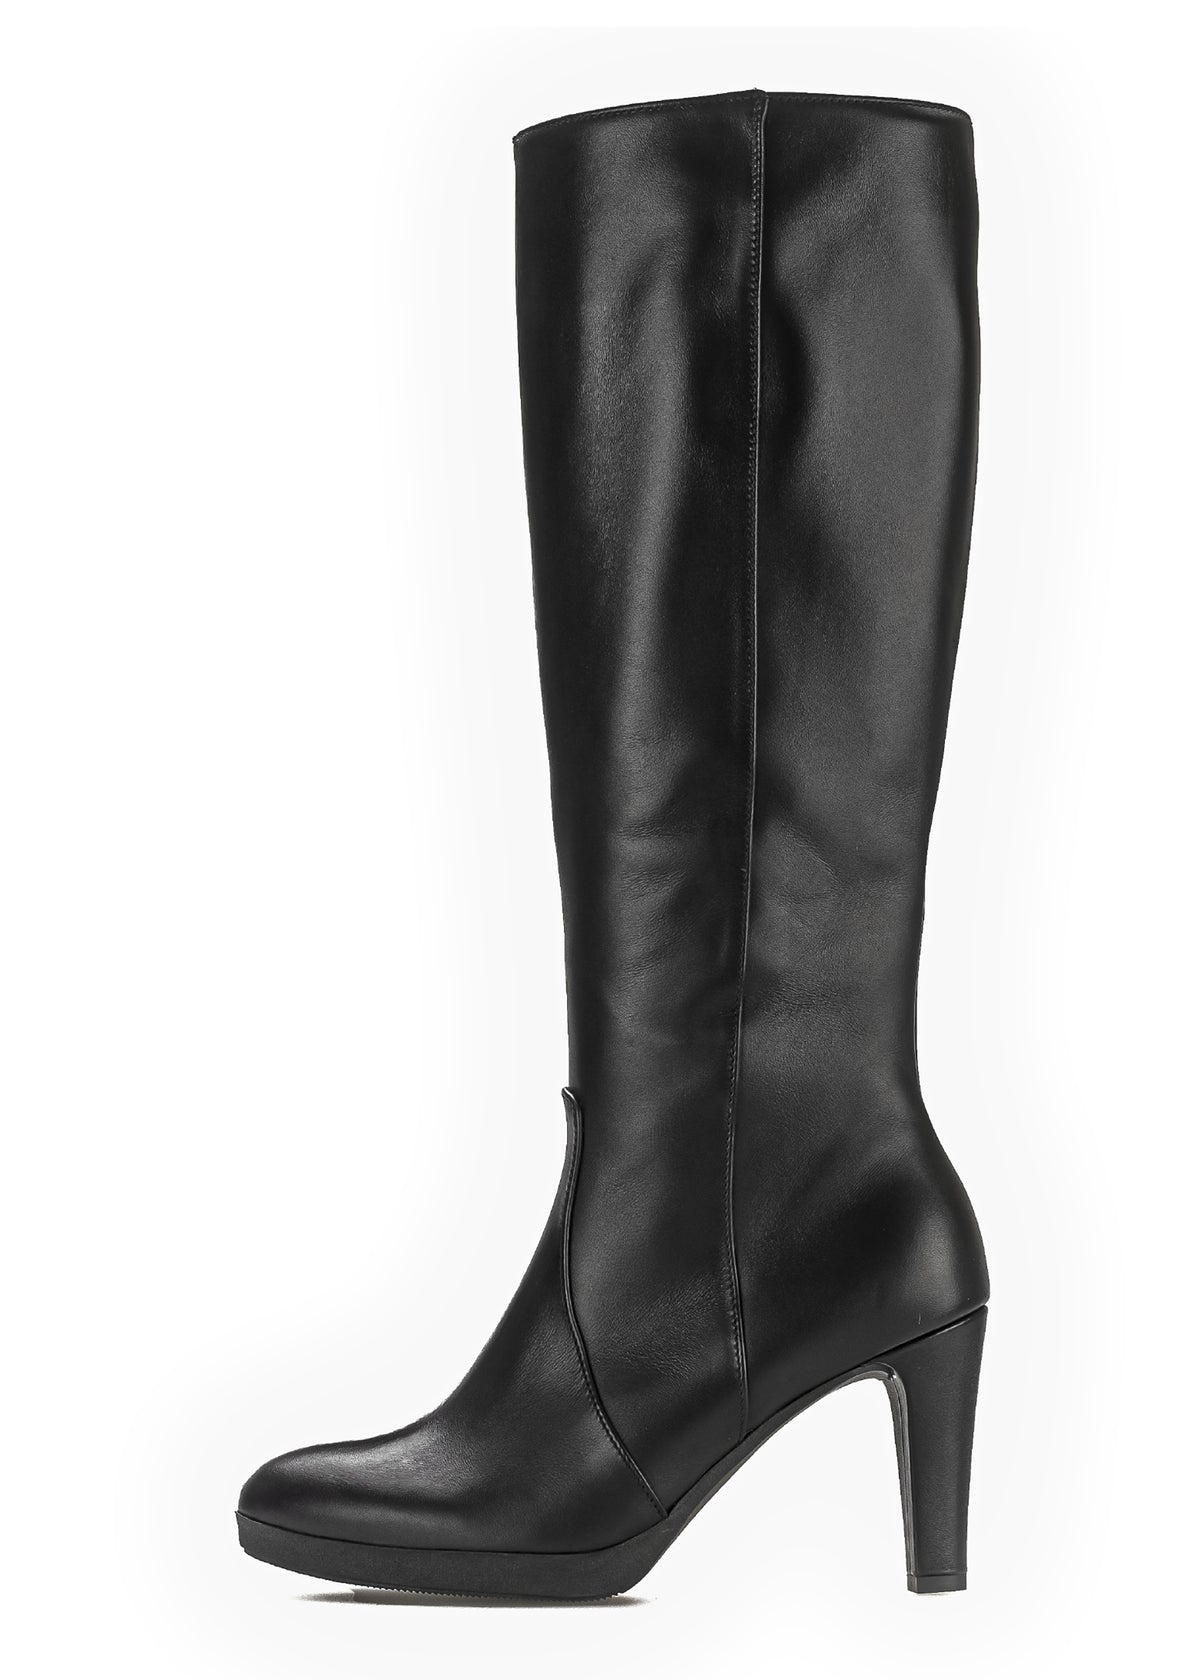 Boots with stiletto heel - black, M shaft